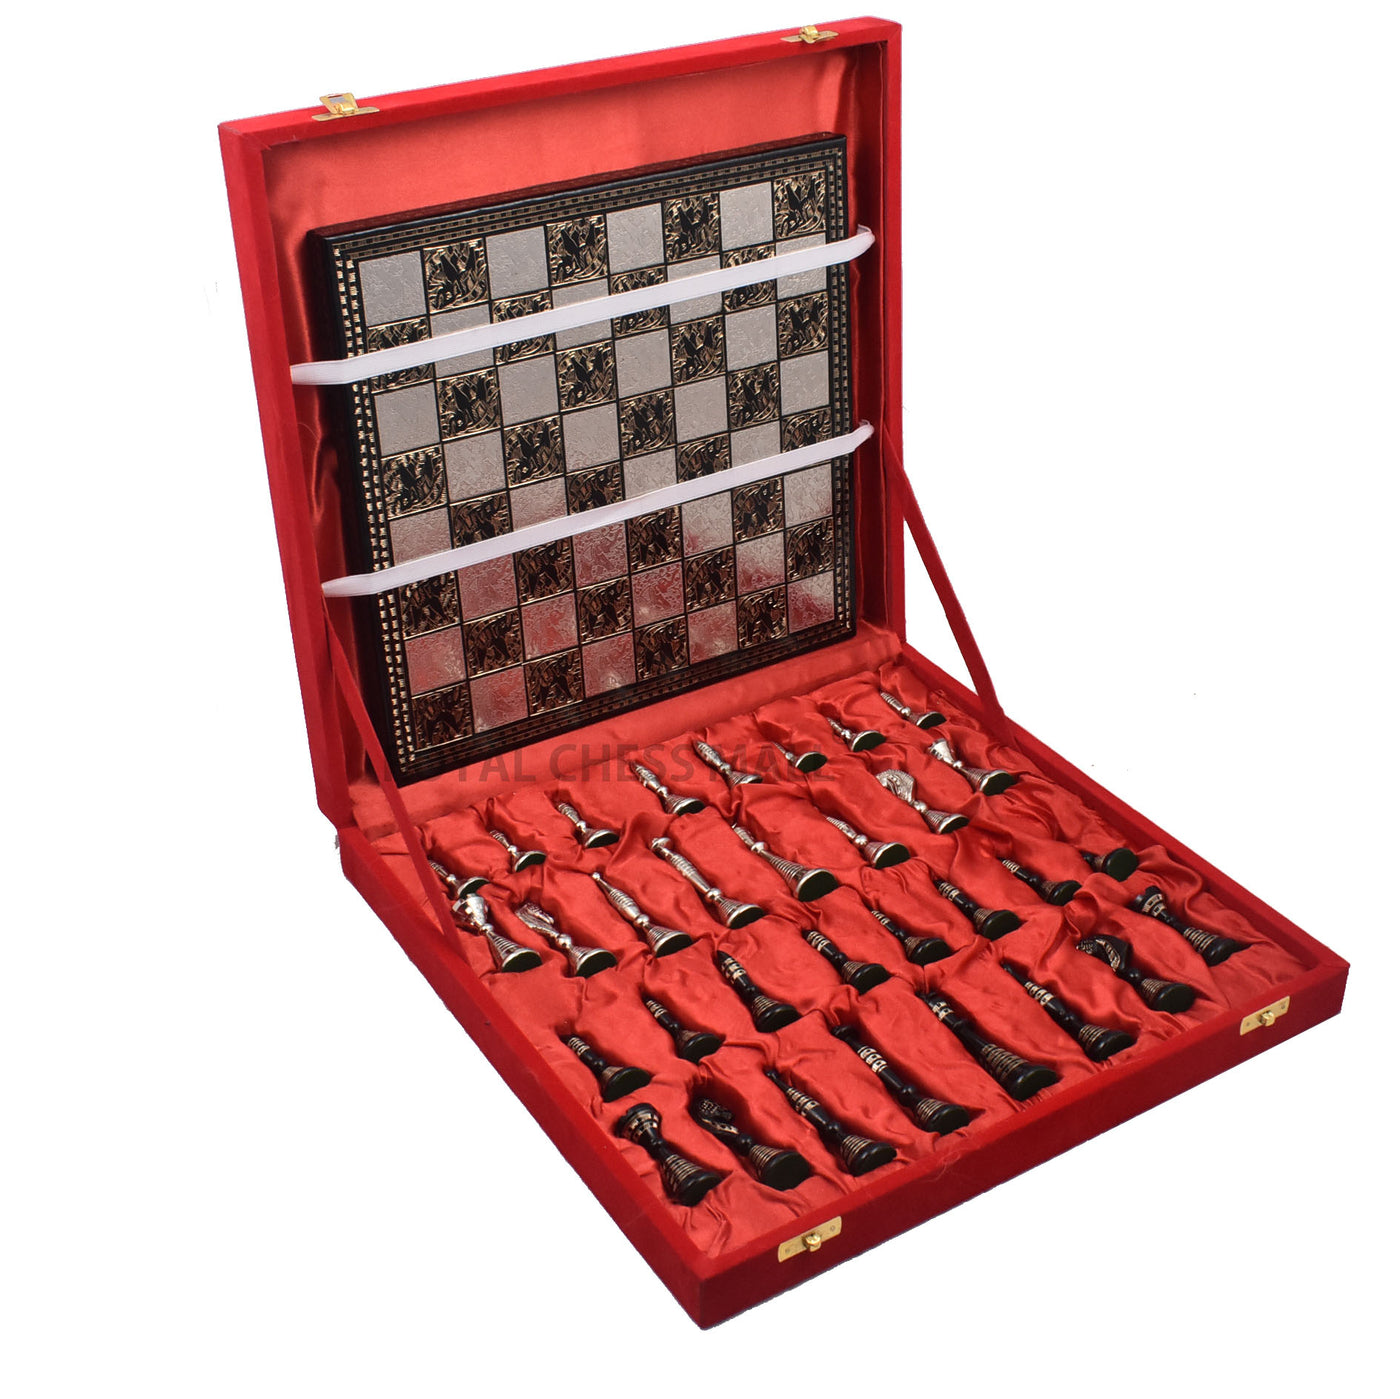 Solid Brass Metal Tribal Artwork Warli Luxury Chess Pieces & Board Set- 12"